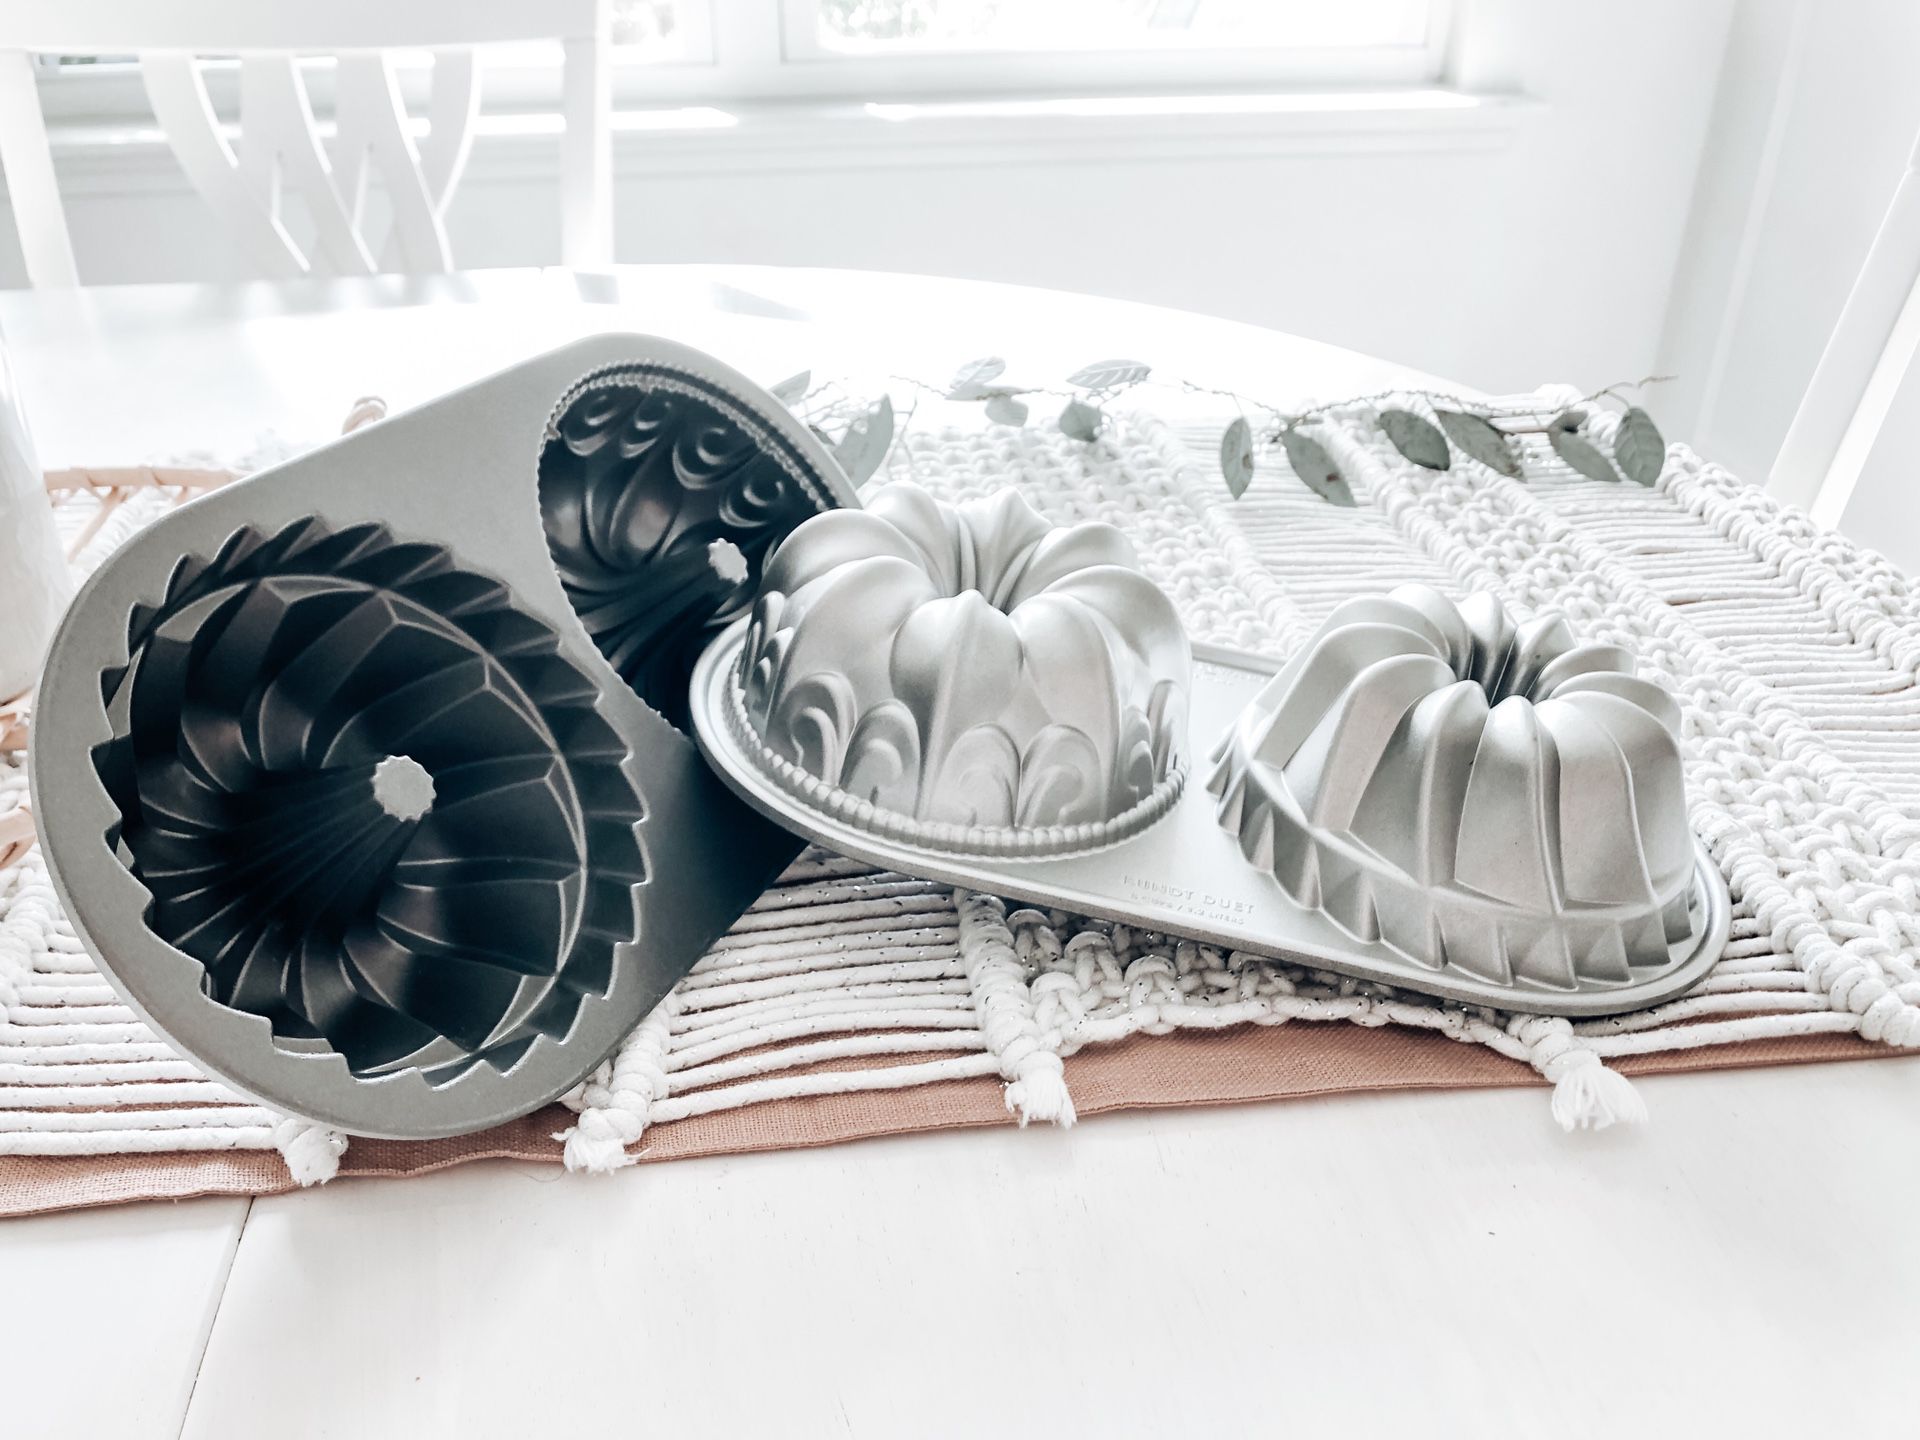 Nordic Ware cast aluminum mini bundt cake pans